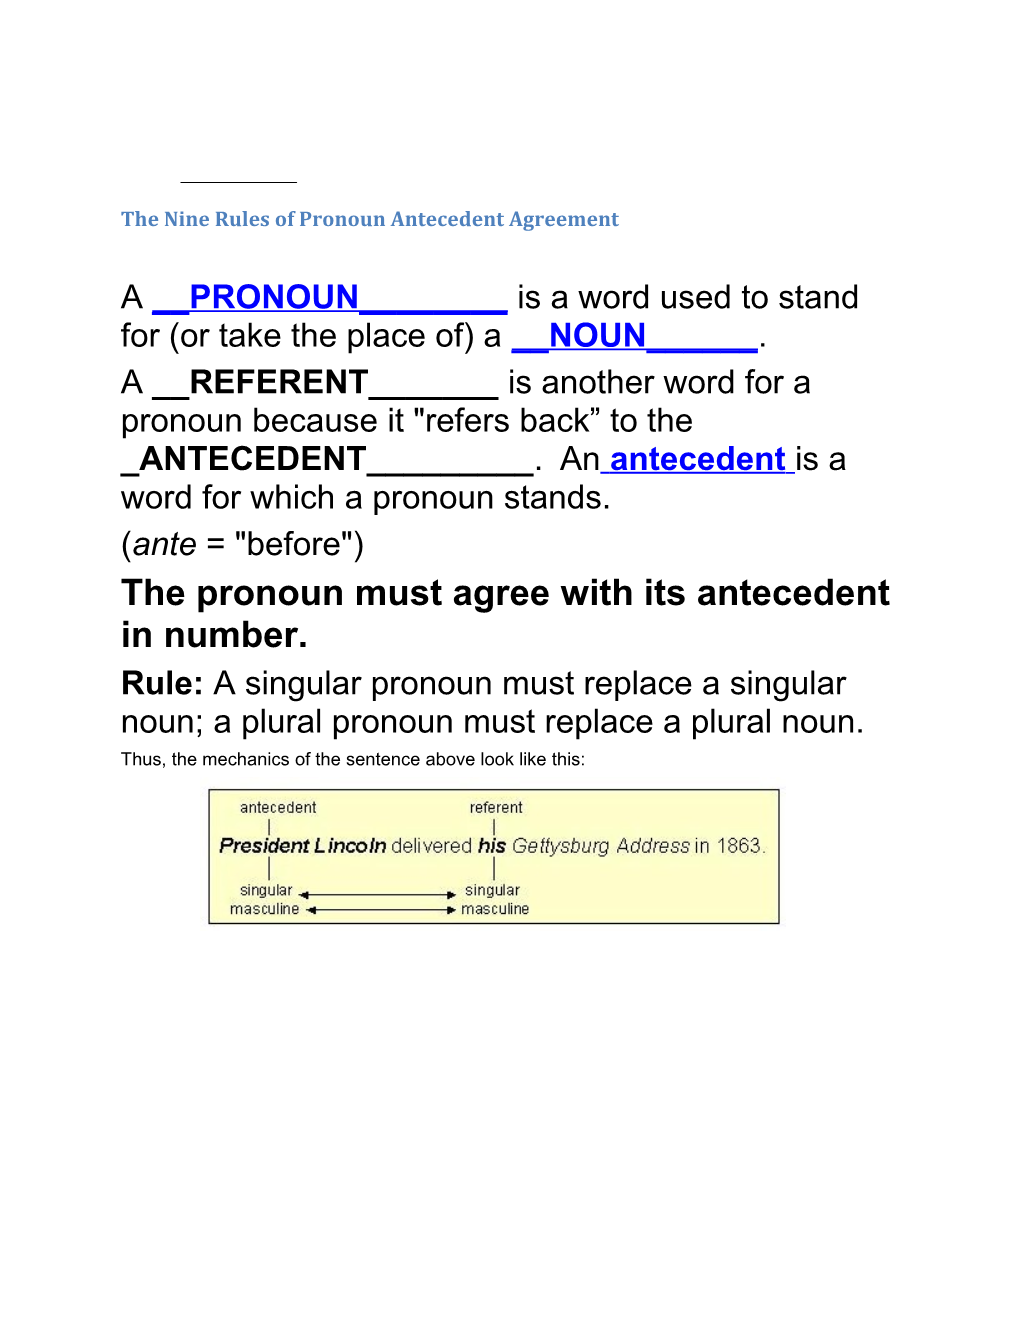 The Nine Rules of Pronoun Antecedent Agreement